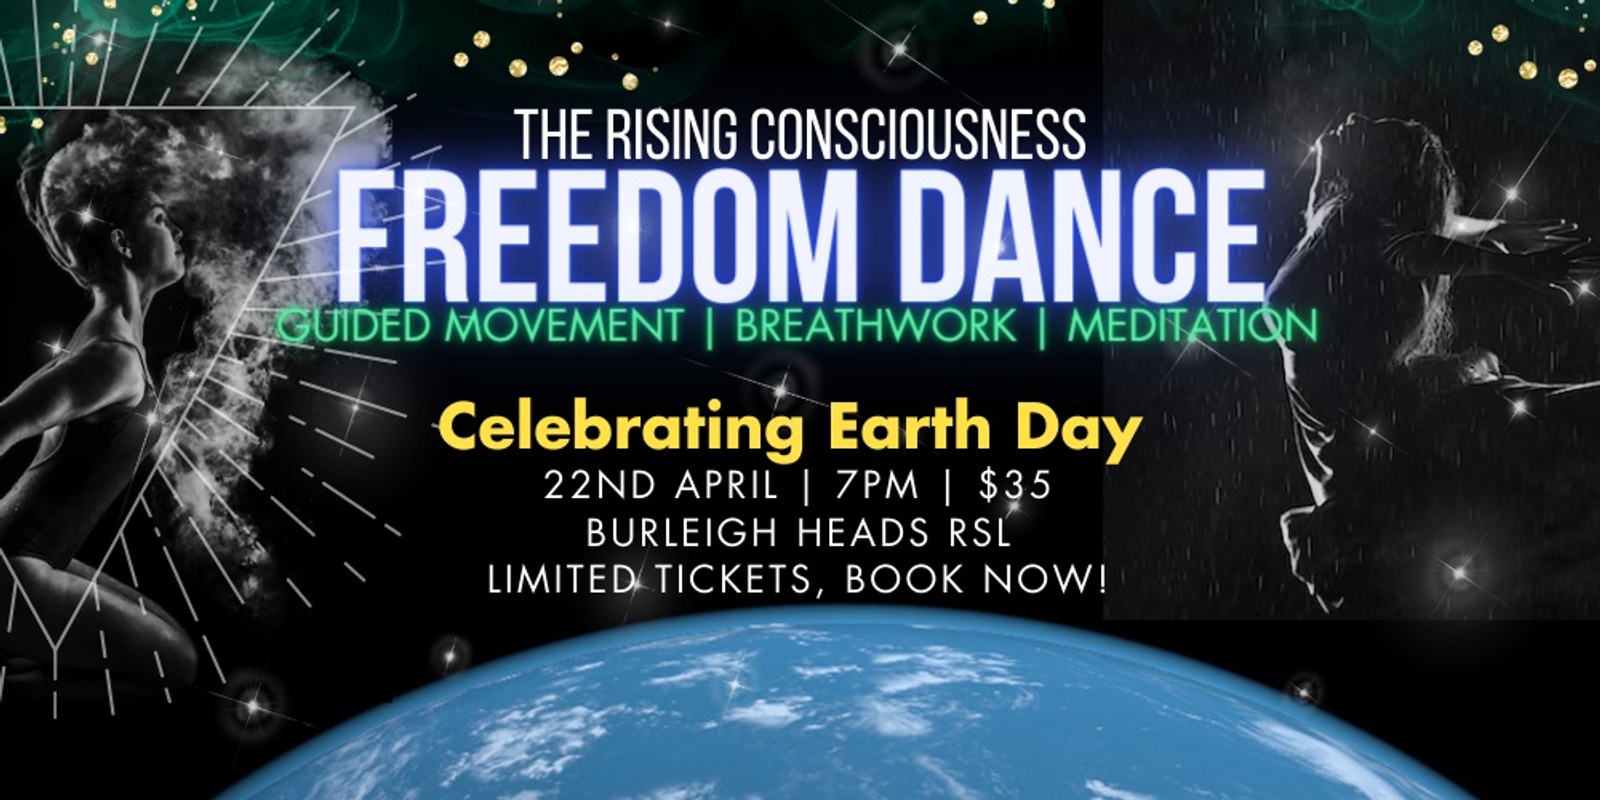 The Rising Consciousness: Freedom Dance, Breathwork & Meditation